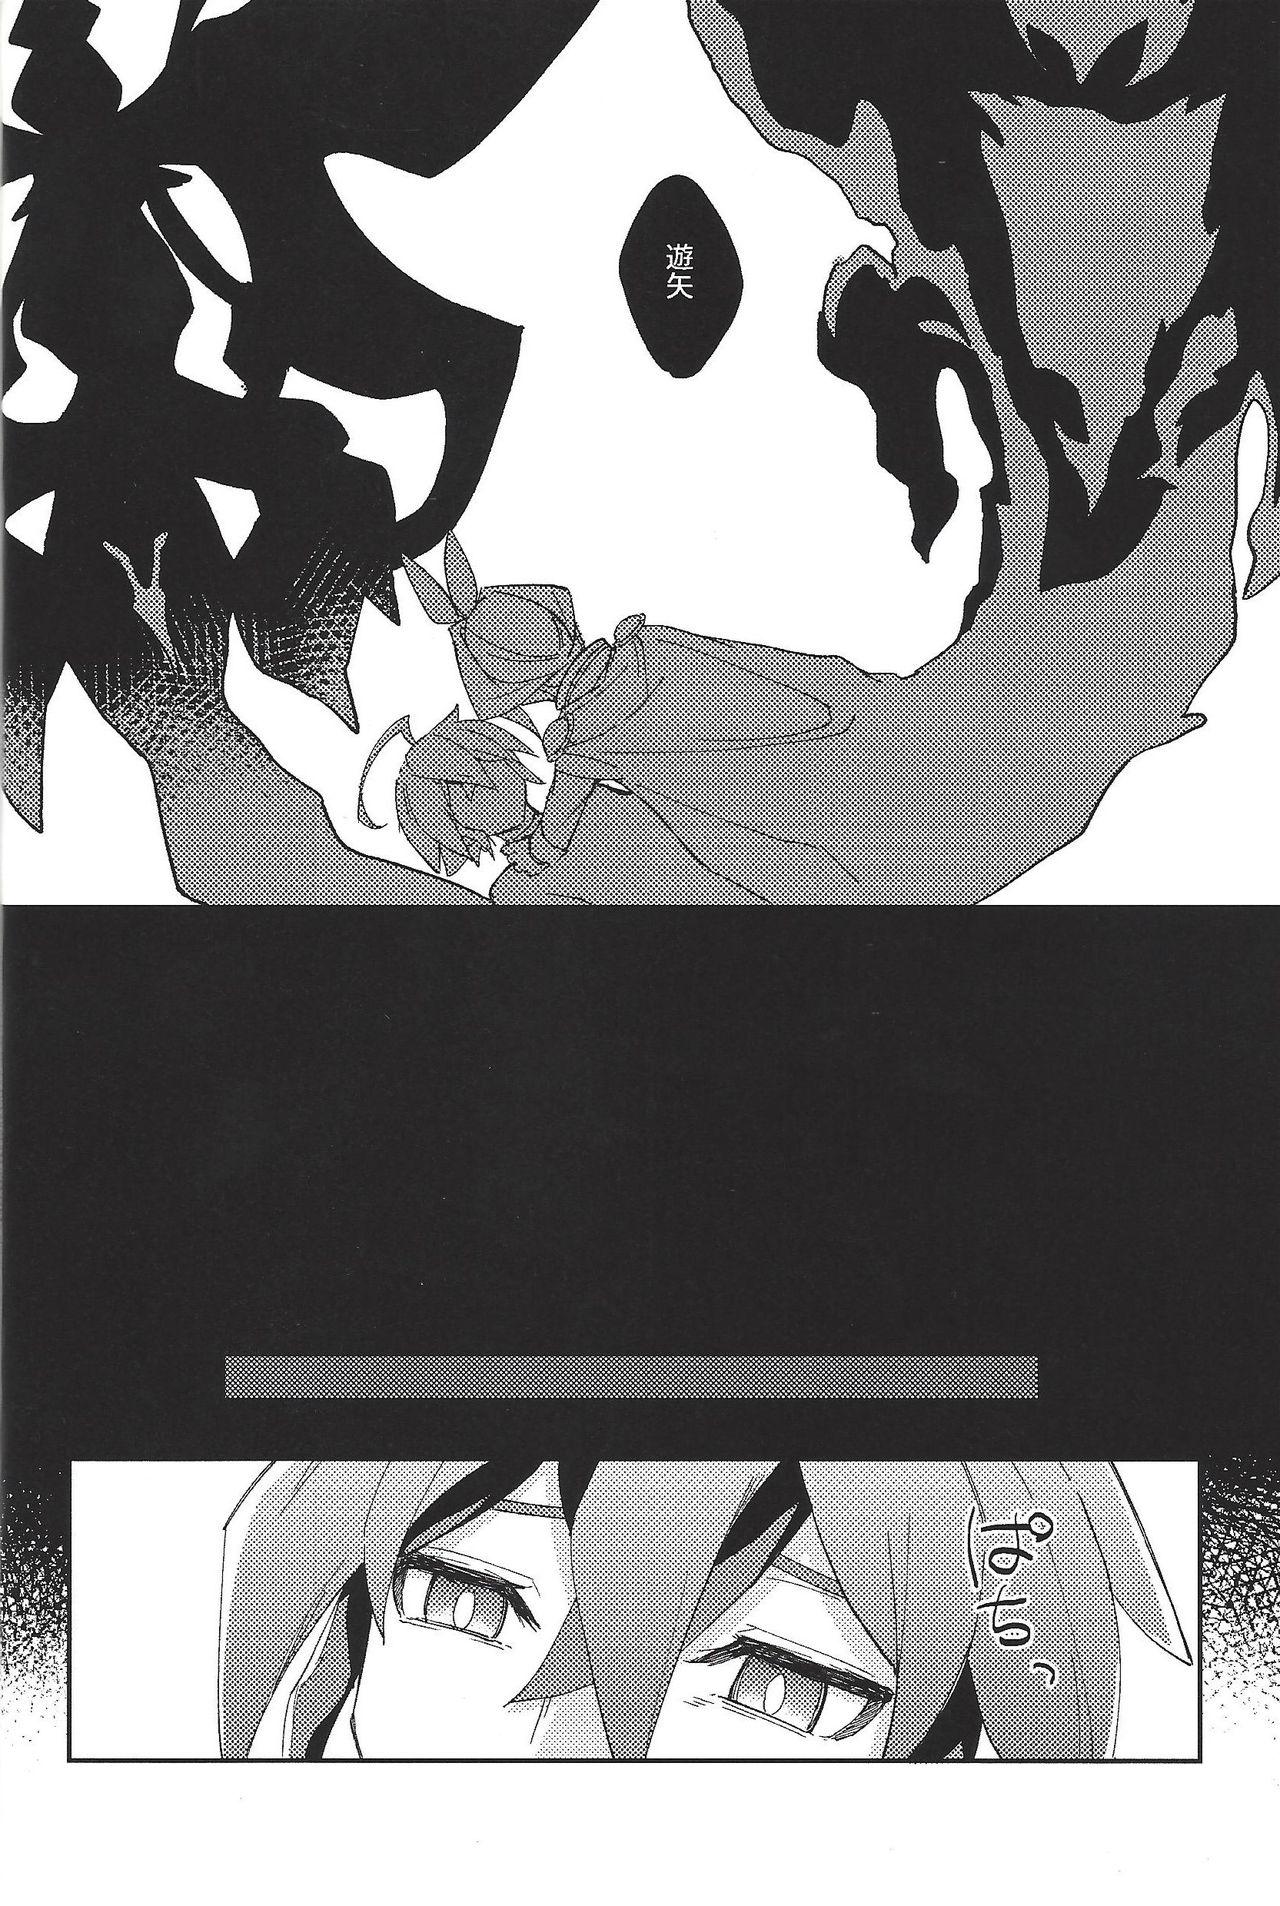 Face Kikatsu - Yu gi oh arc v Clit - Page 6